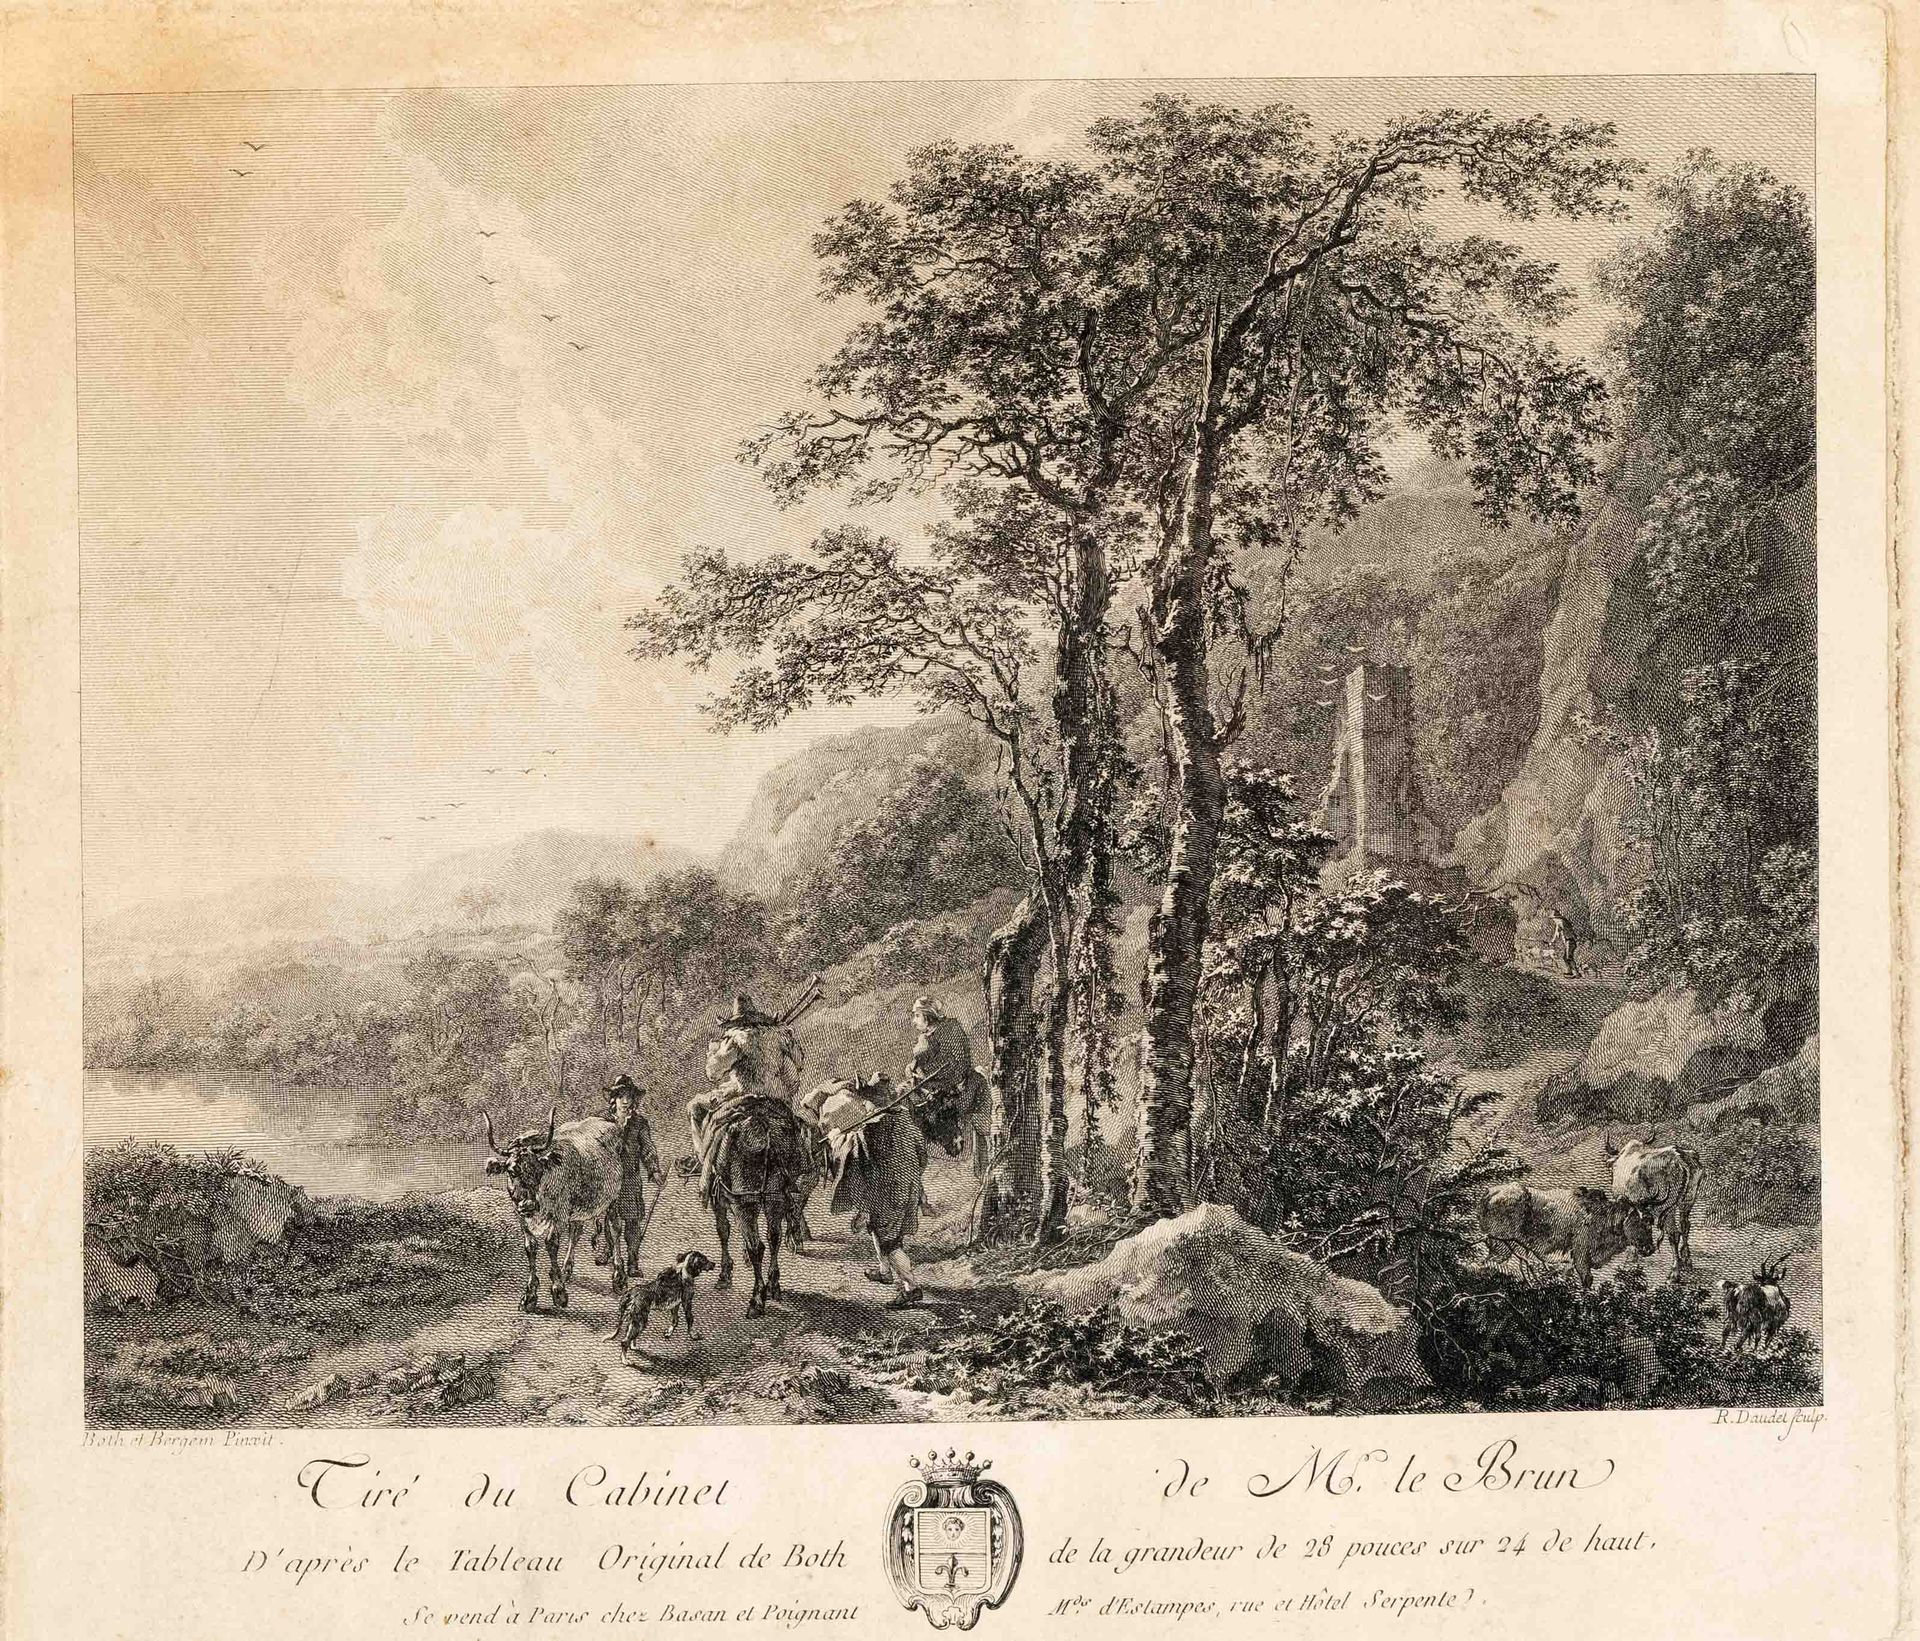 Null Robert Daudet (1737-1824), Reproducción de un grabado sobre un cuadro de Di&hellip;